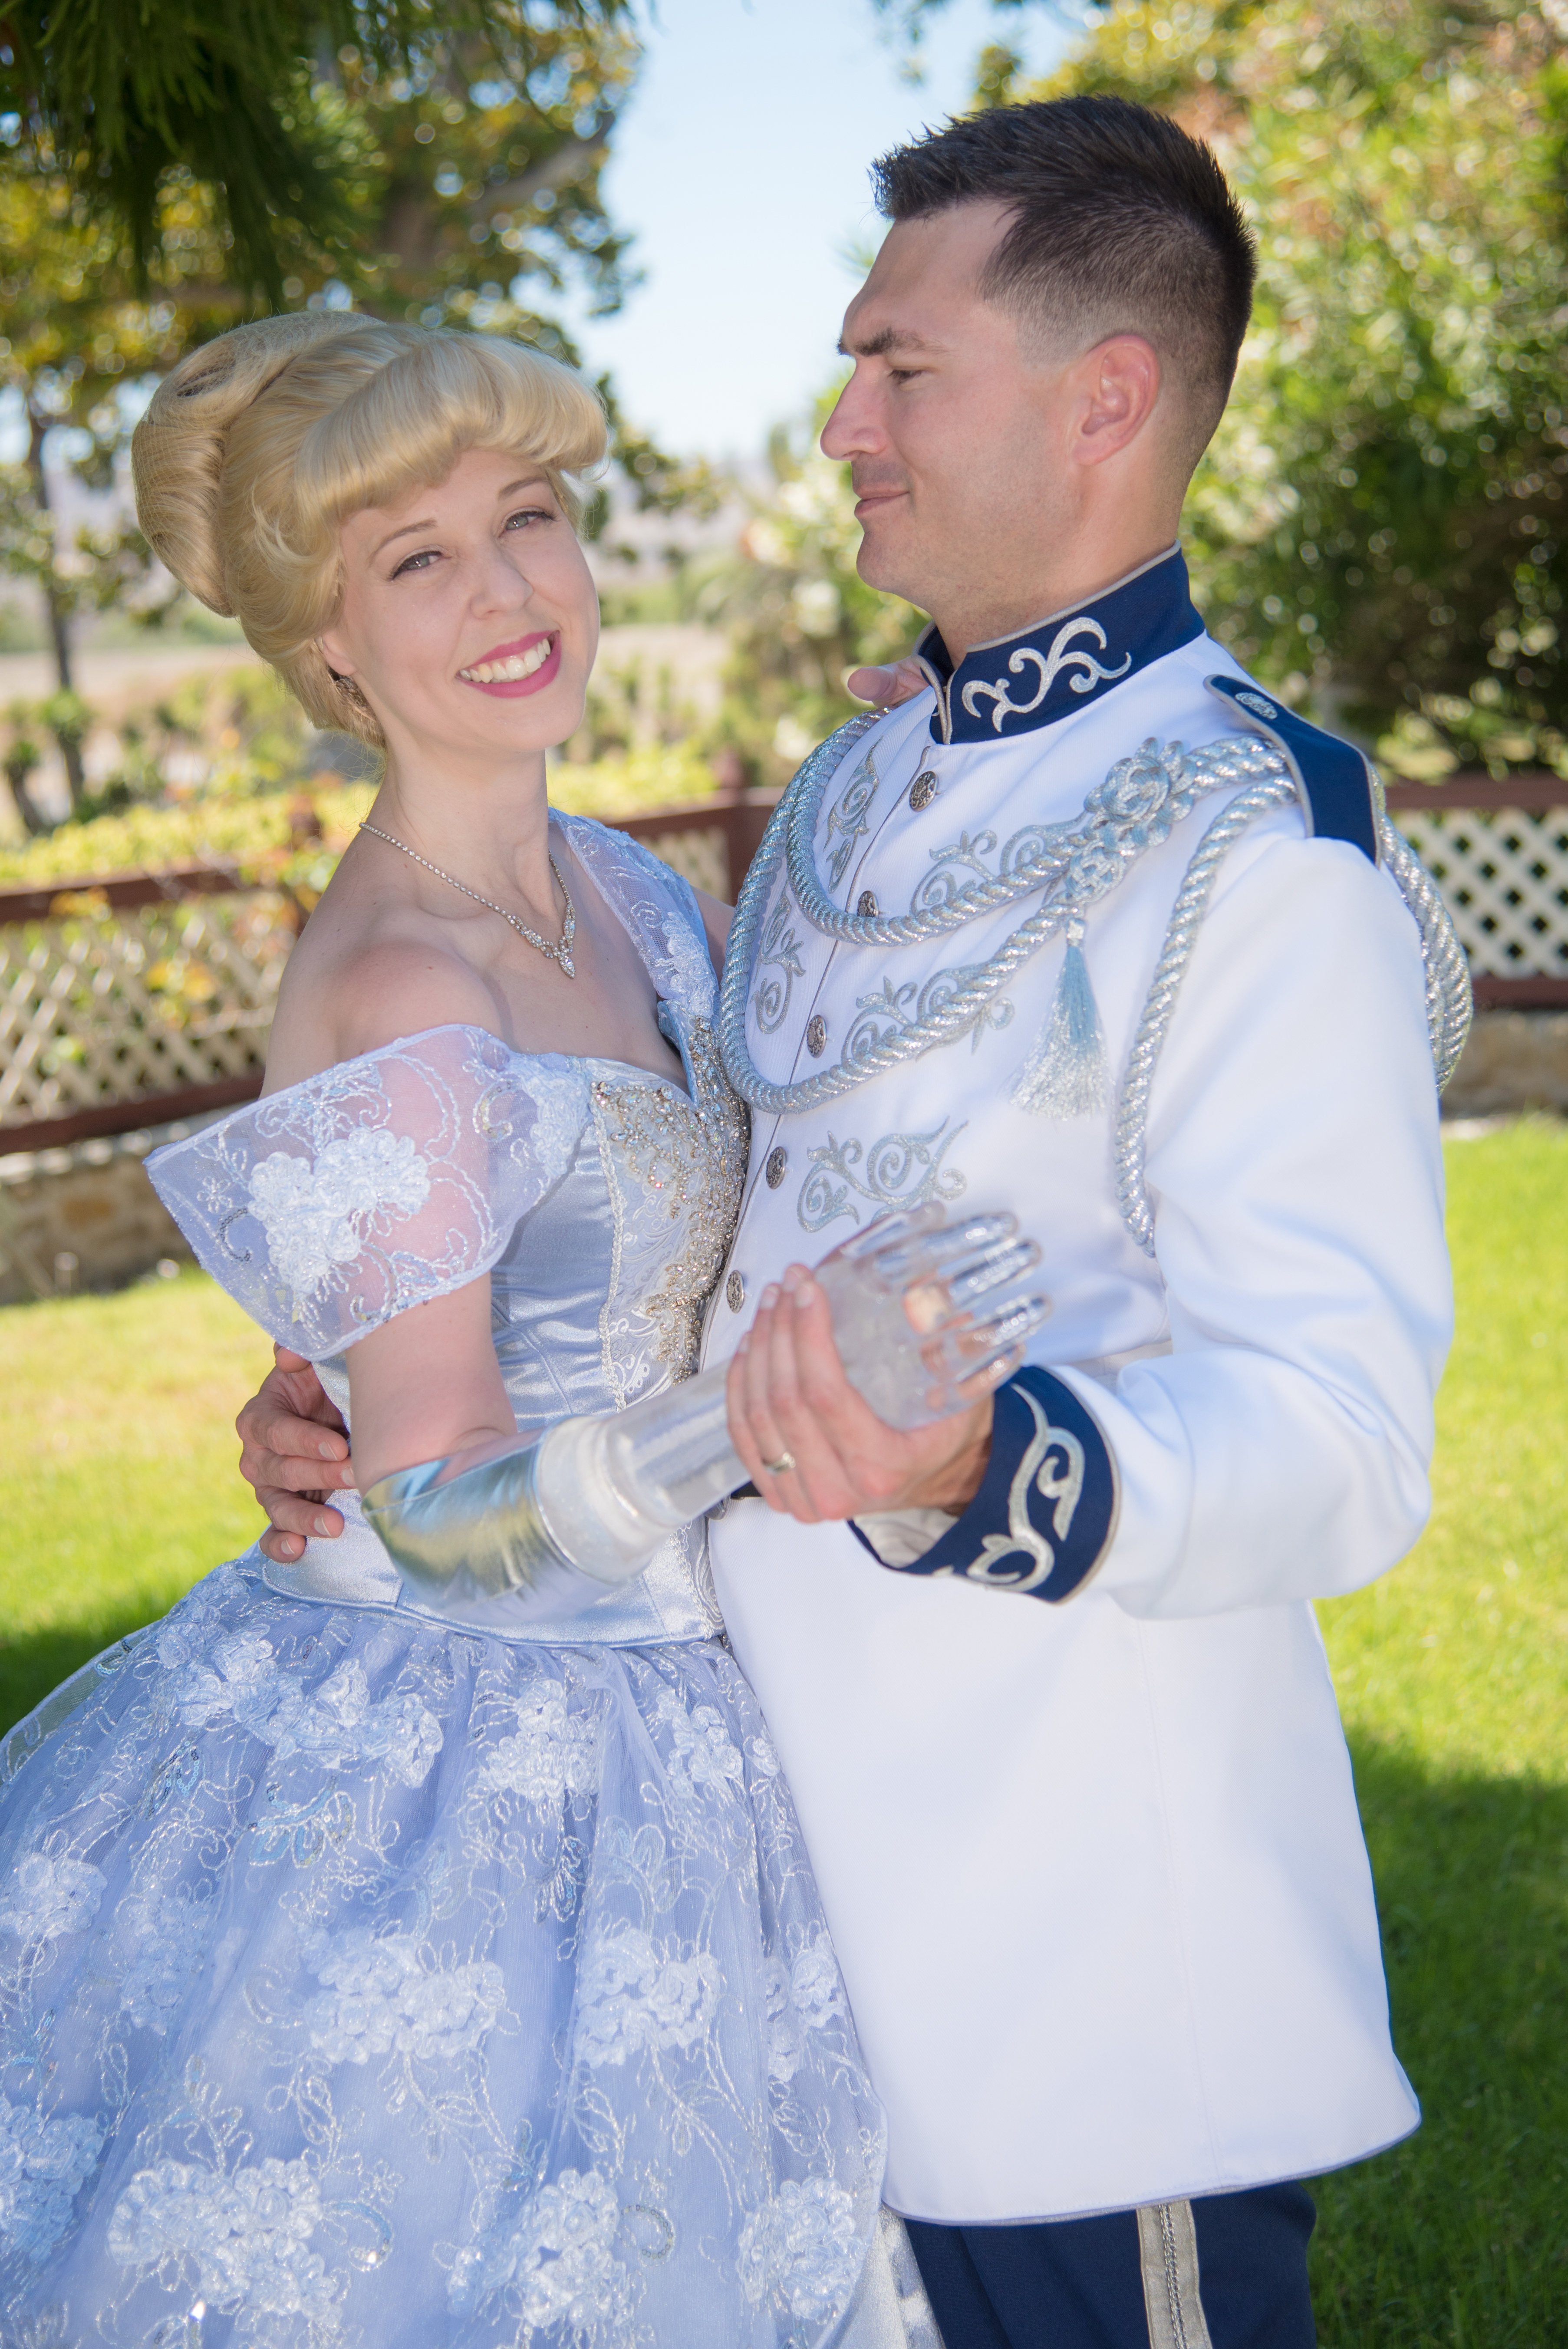 Mandy and Ryan Pursley as Cinderella and Prince Charming